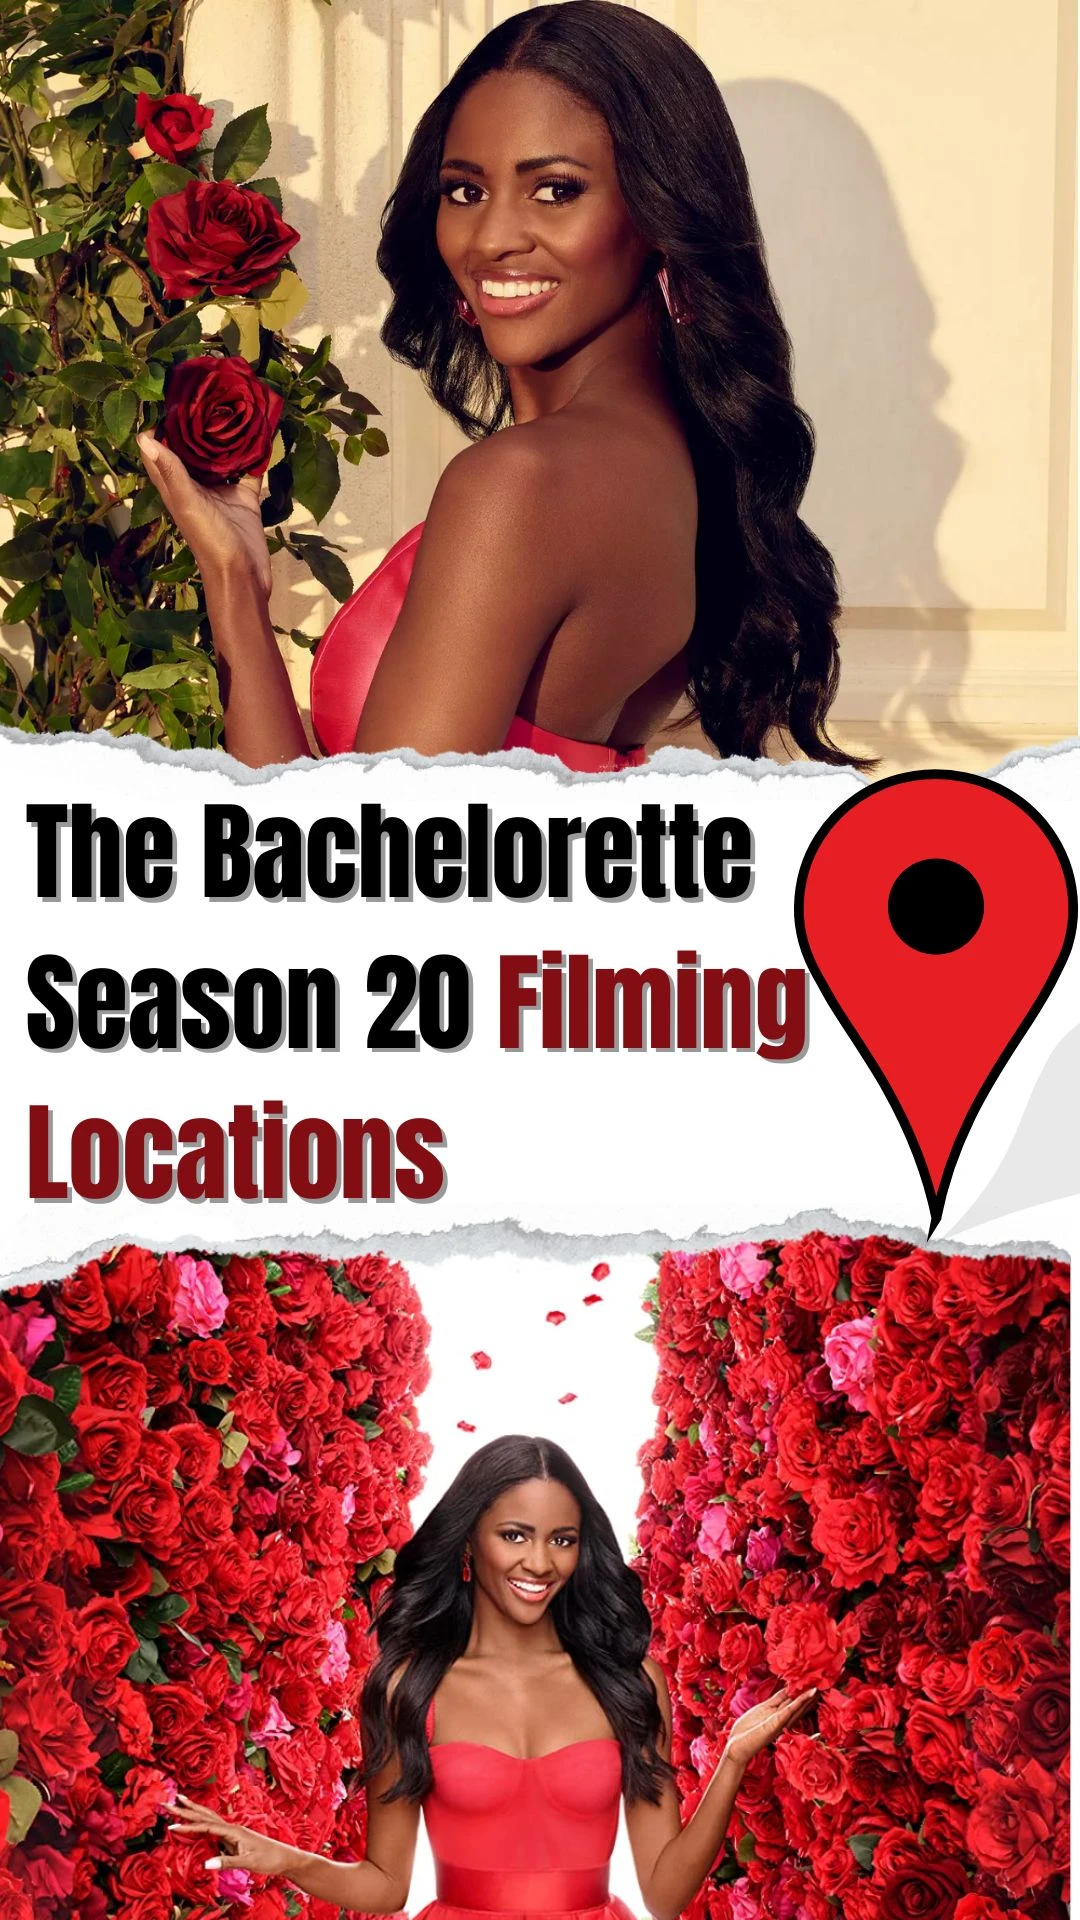 The Bachelorette Season 20 Filming Locations